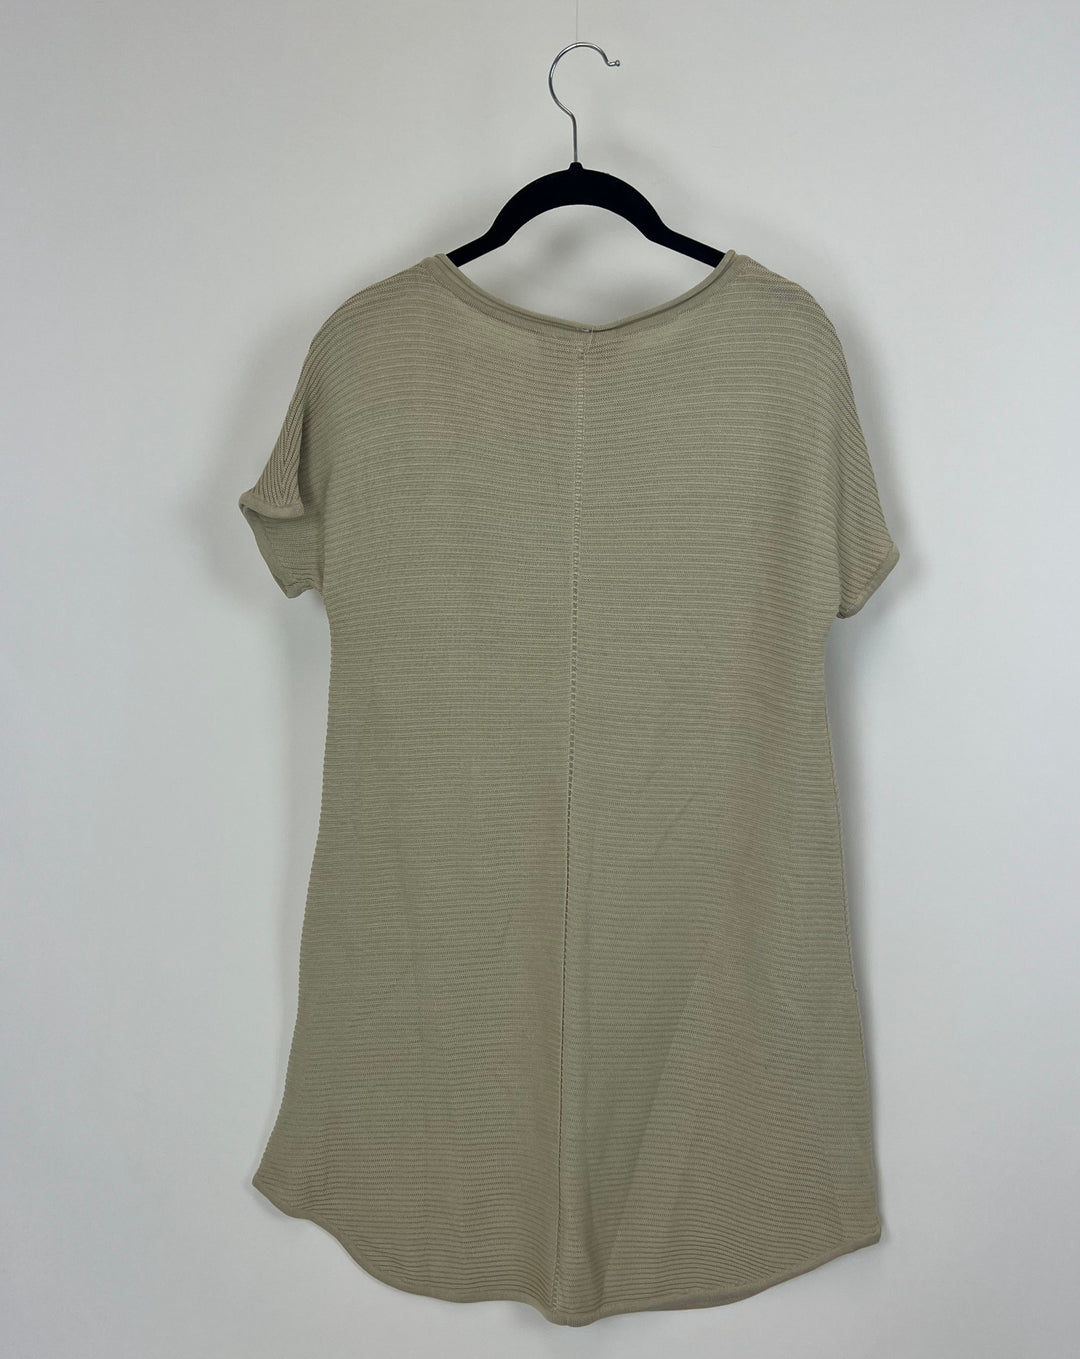 Ribbed Tan Dress - Size 2-4